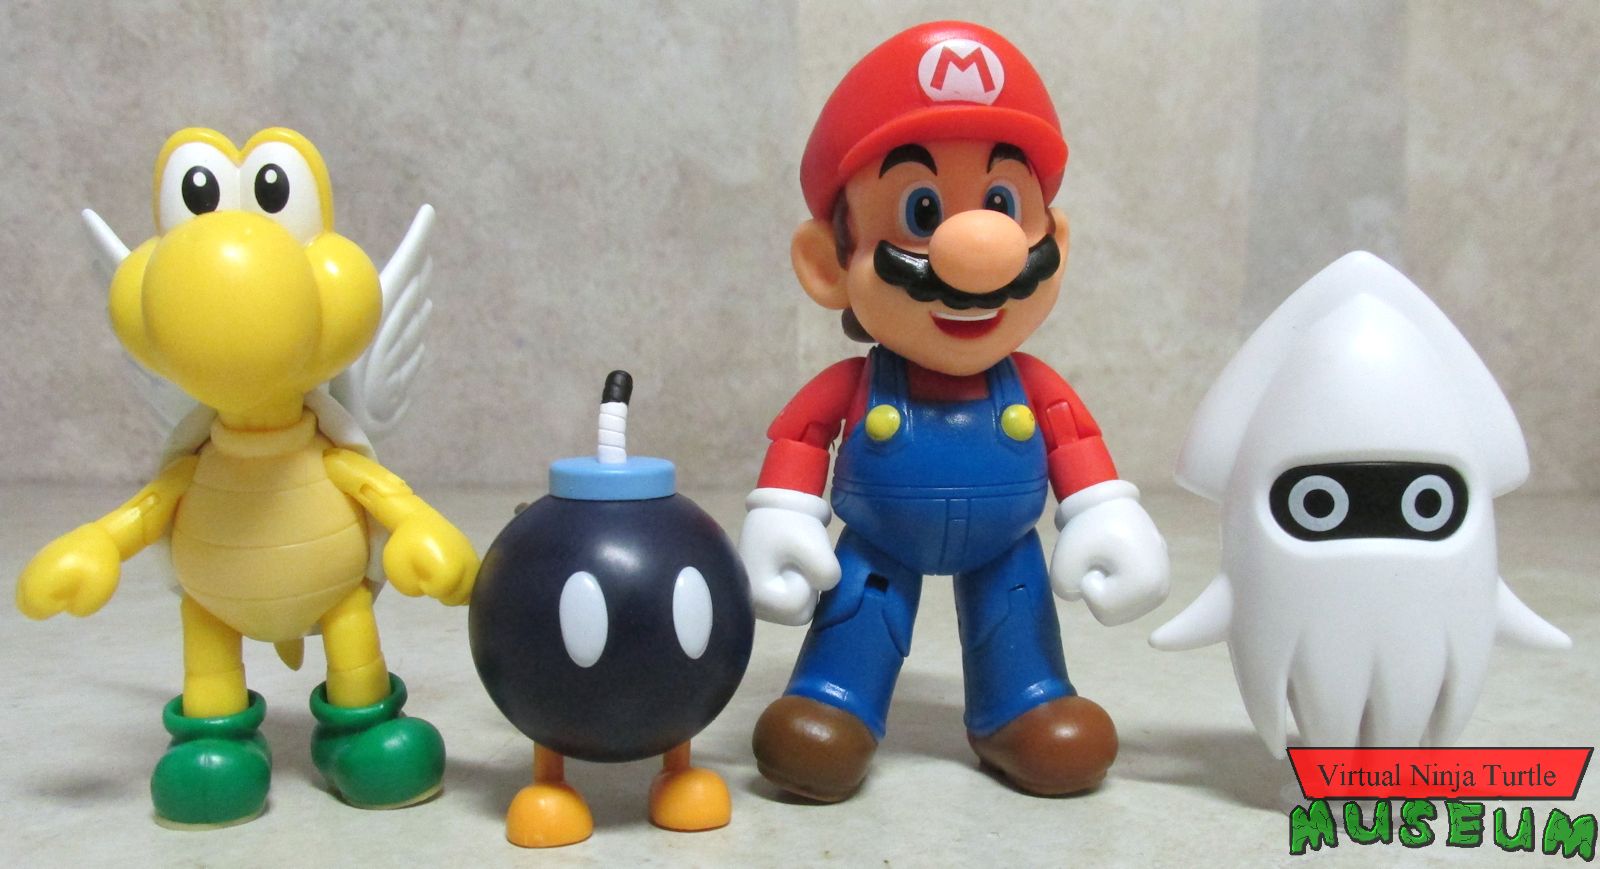 Mario and new enemies